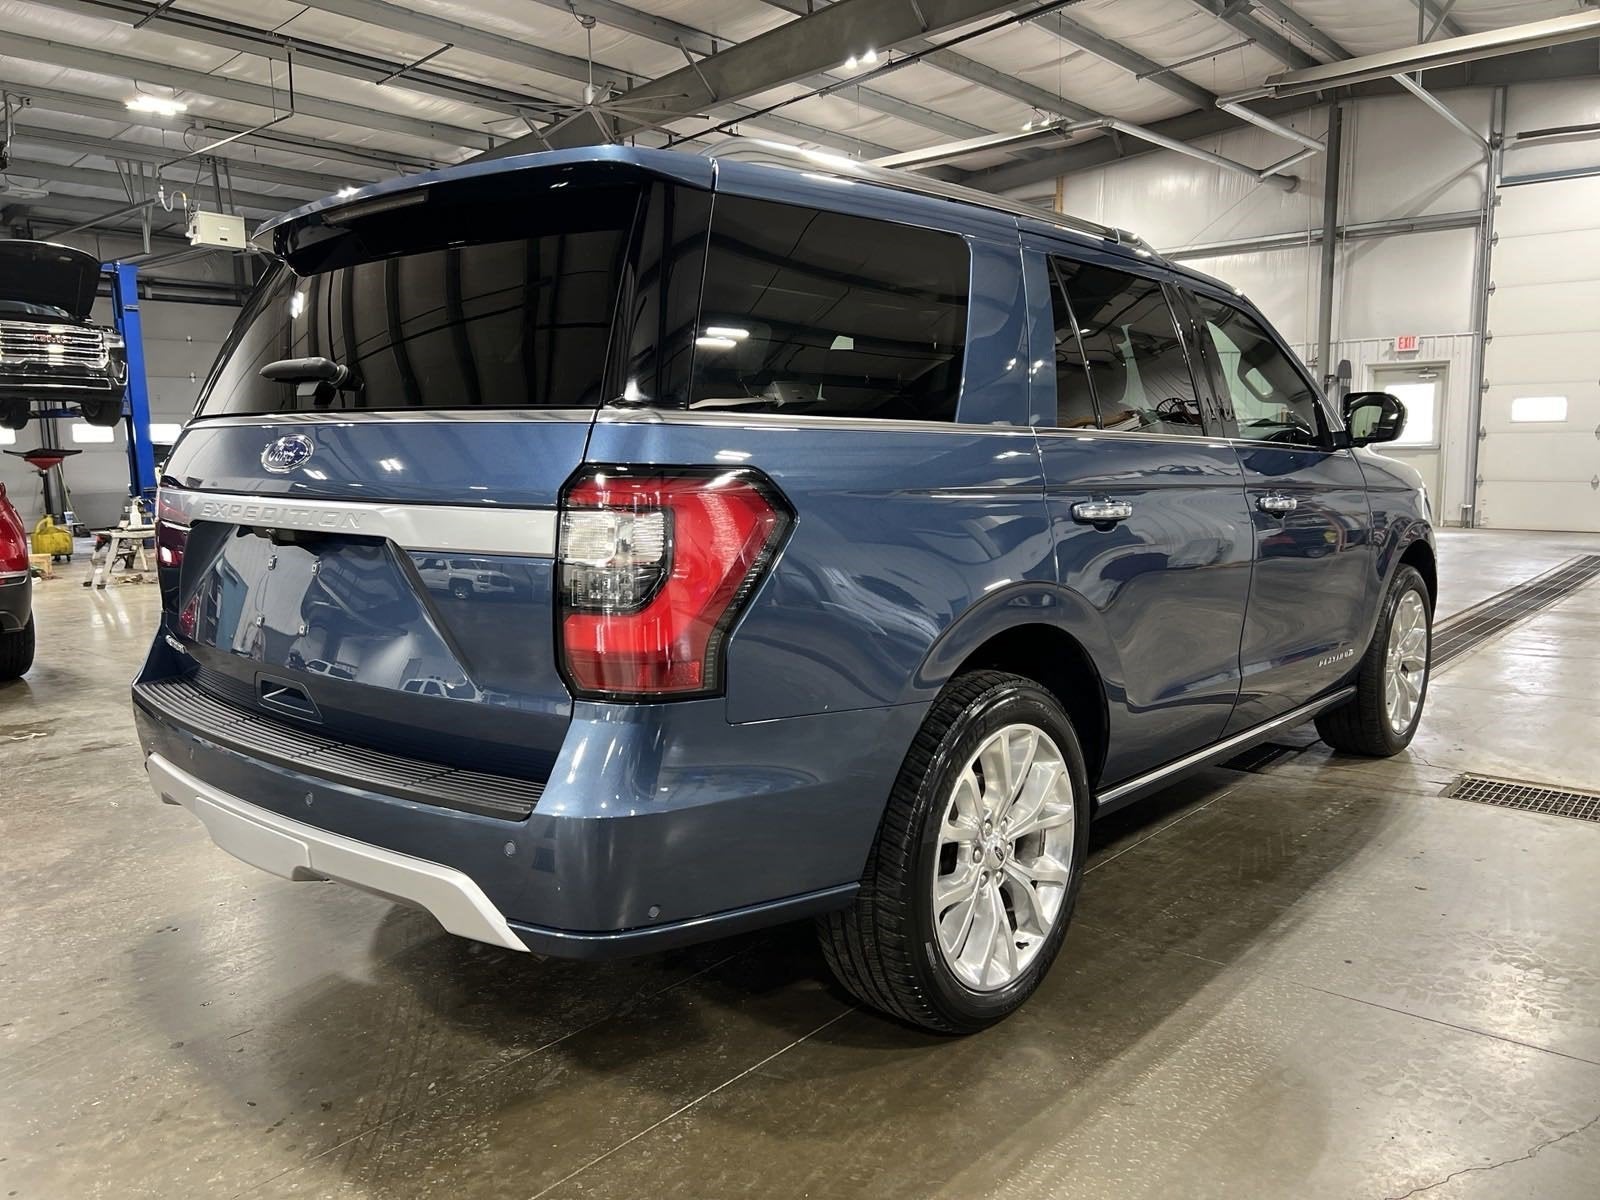 2019 Ford Expedition Platinum